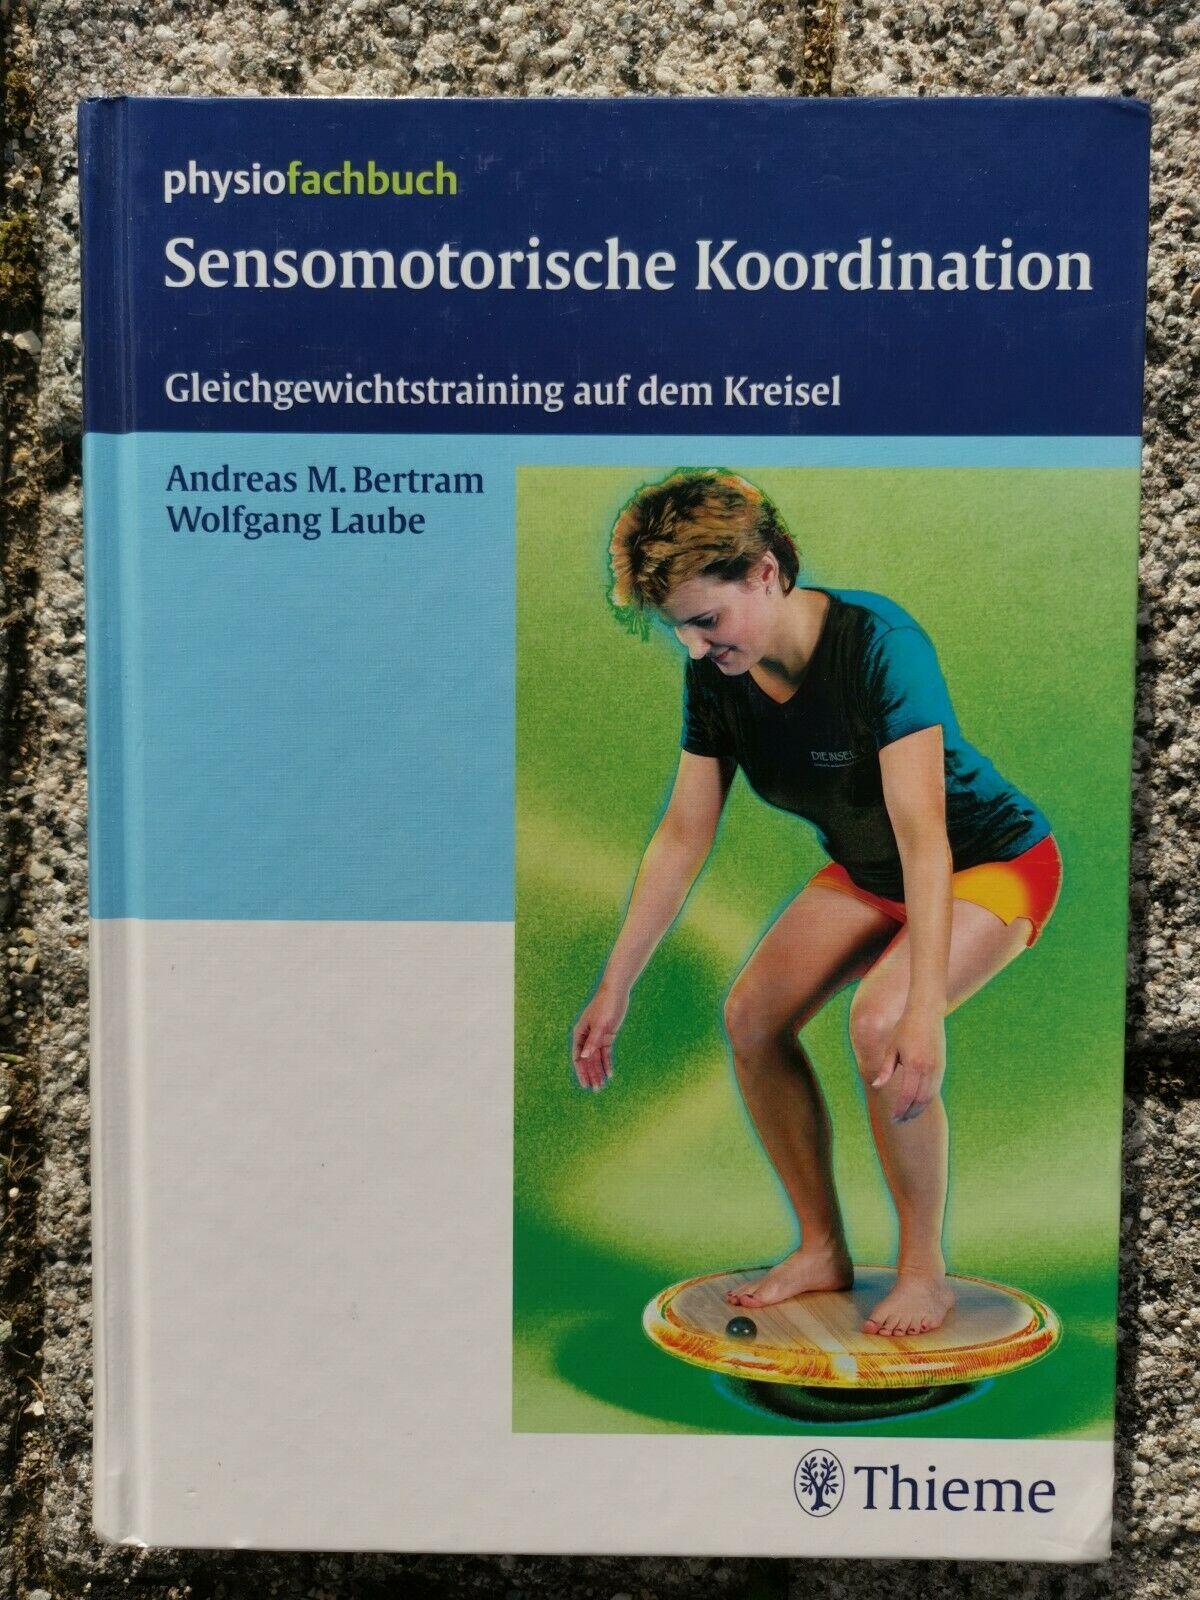 Sensomotorische Koordination: Gleichgewichtstraining auf dem Kreisel (Physiofachbuch) [hardcover] Bertram, Andreas M.,Laube, Wolfgang [2008]… 313143791X